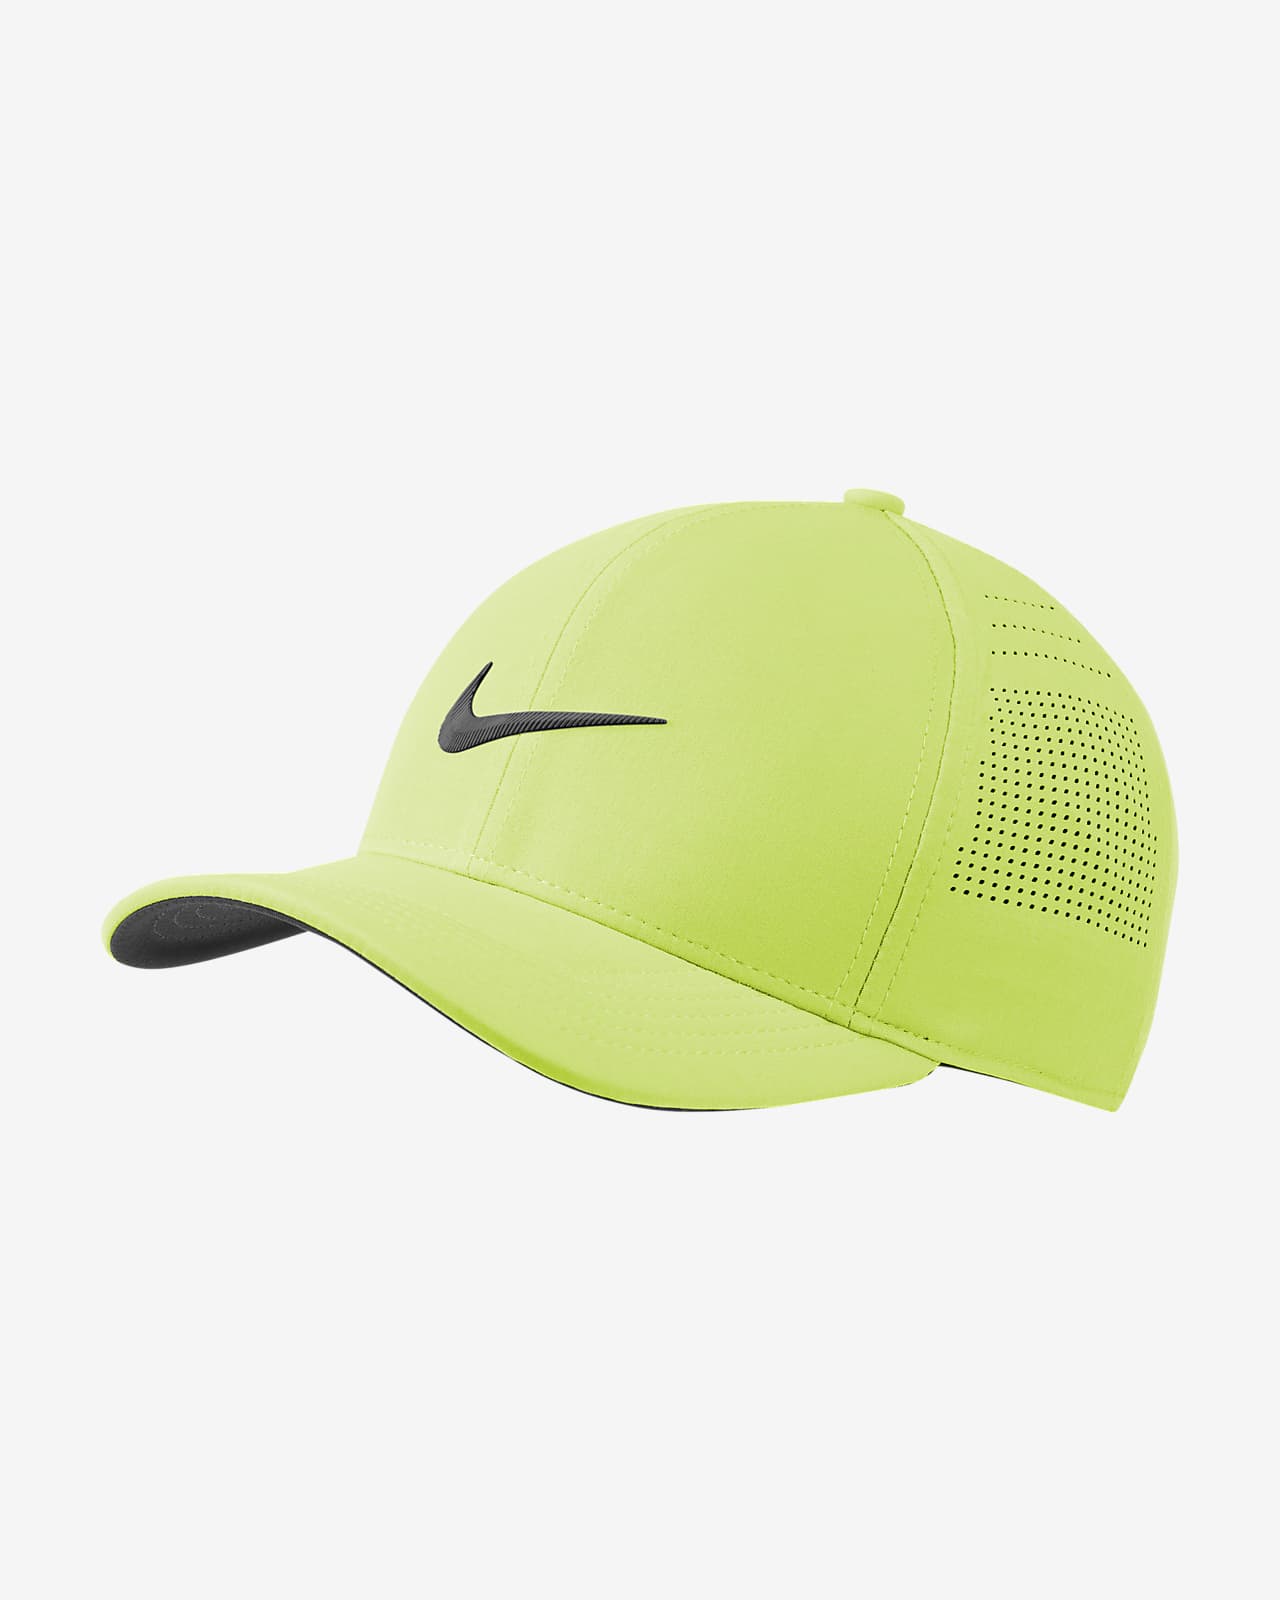 Nike AeroBill Classic99 Golf Hat